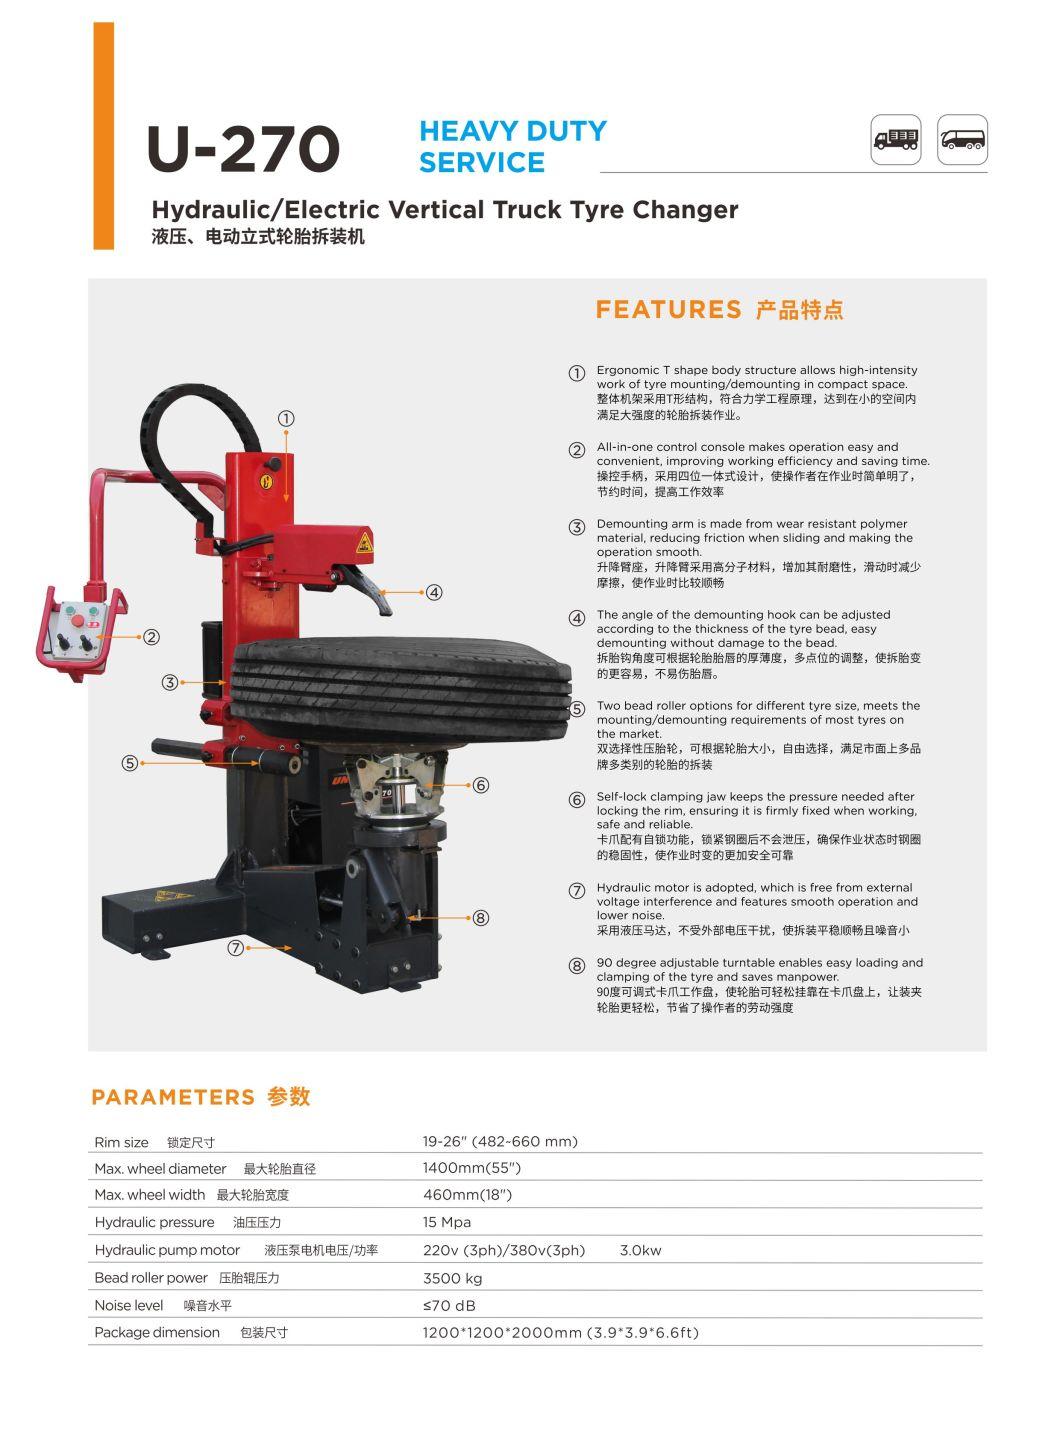 Unite Truck Tire Changer Hydraulic Electric Vertical Truck Tyre Changer Heavy Duty Truck Tire Changer U-270